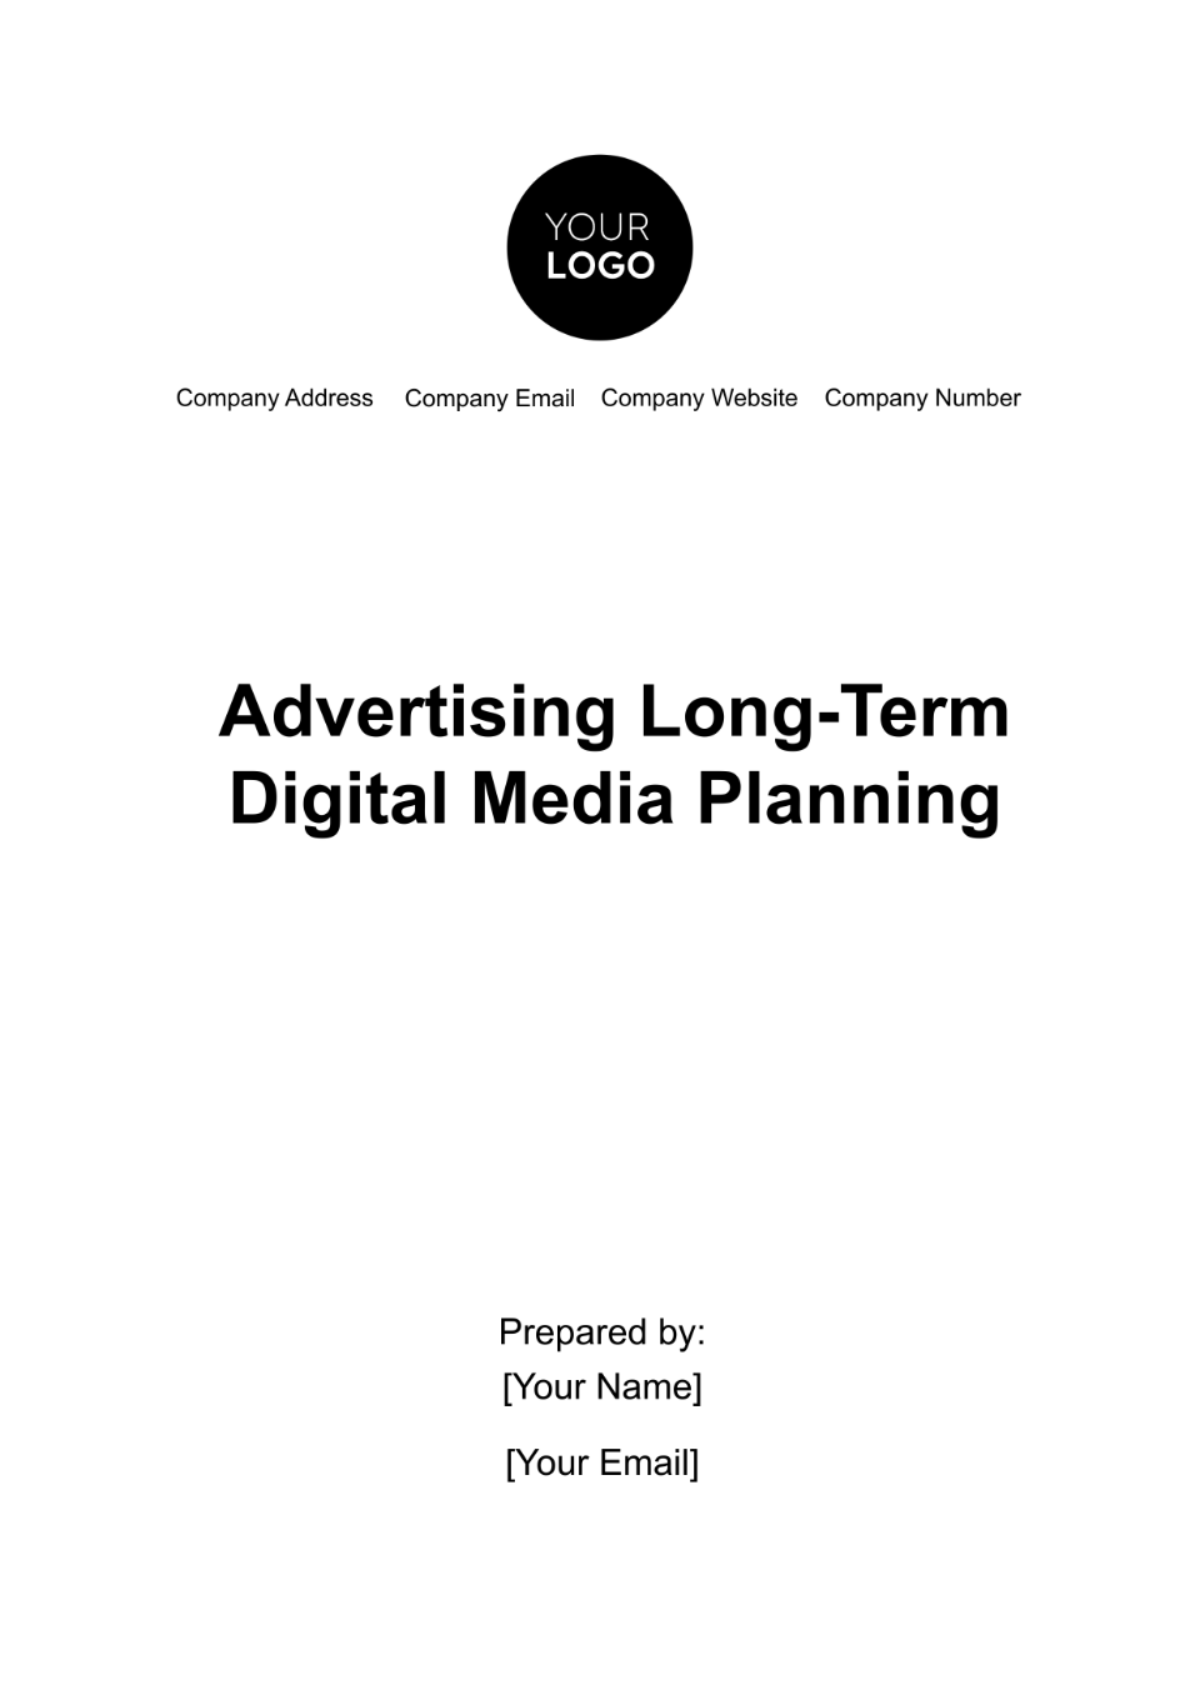 Free Advertising Long-Term Digital Media Planning Template